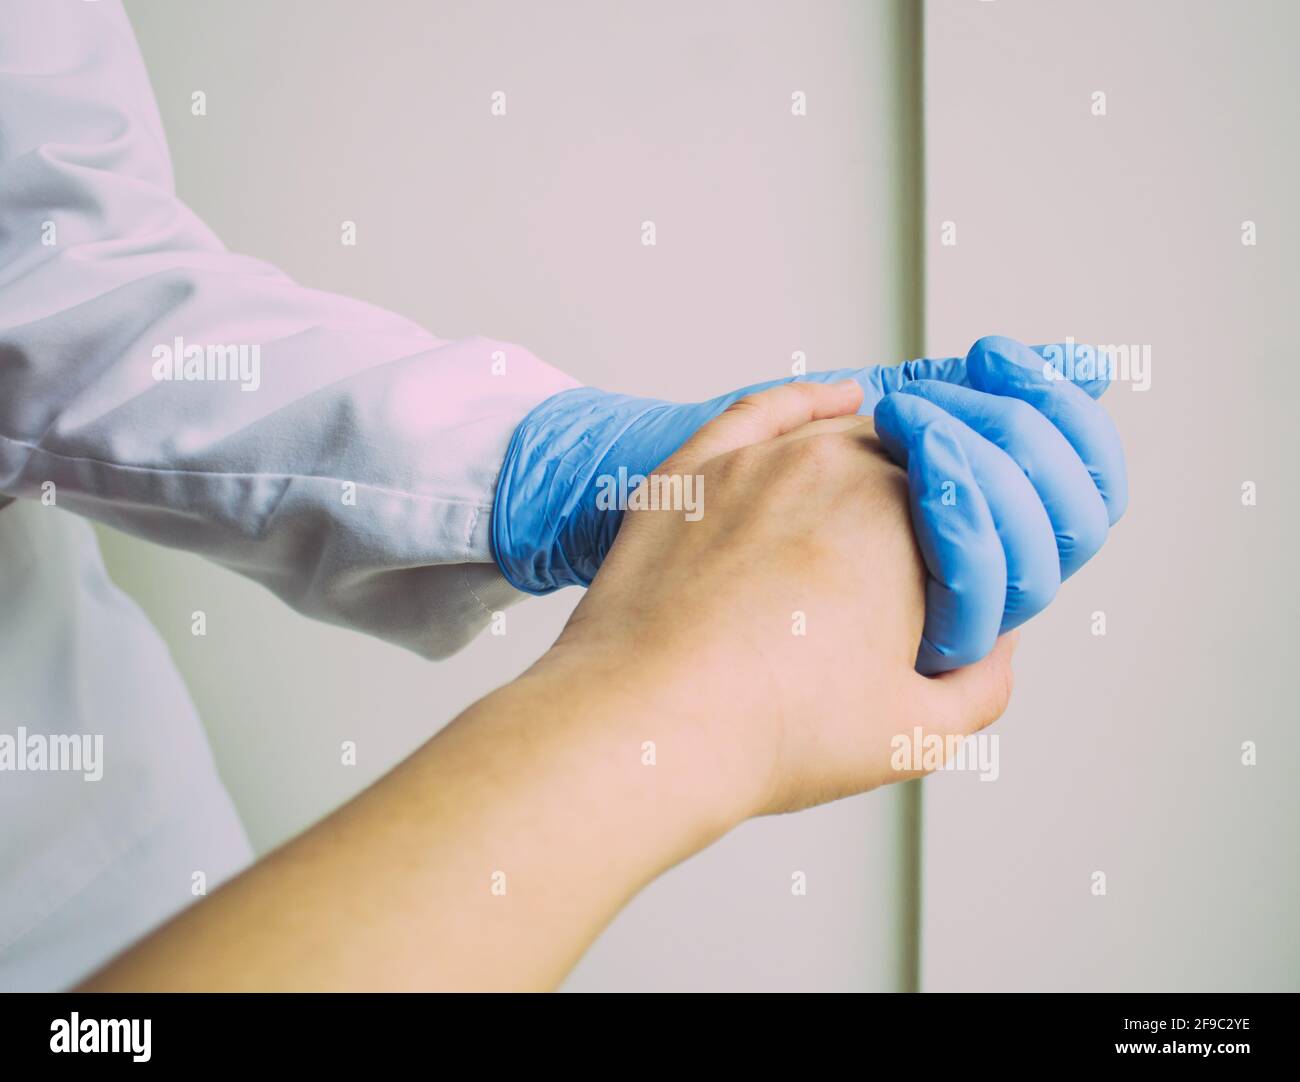 main de femme tenant la main d'un médecin avec un gant bleu Banque D'Images